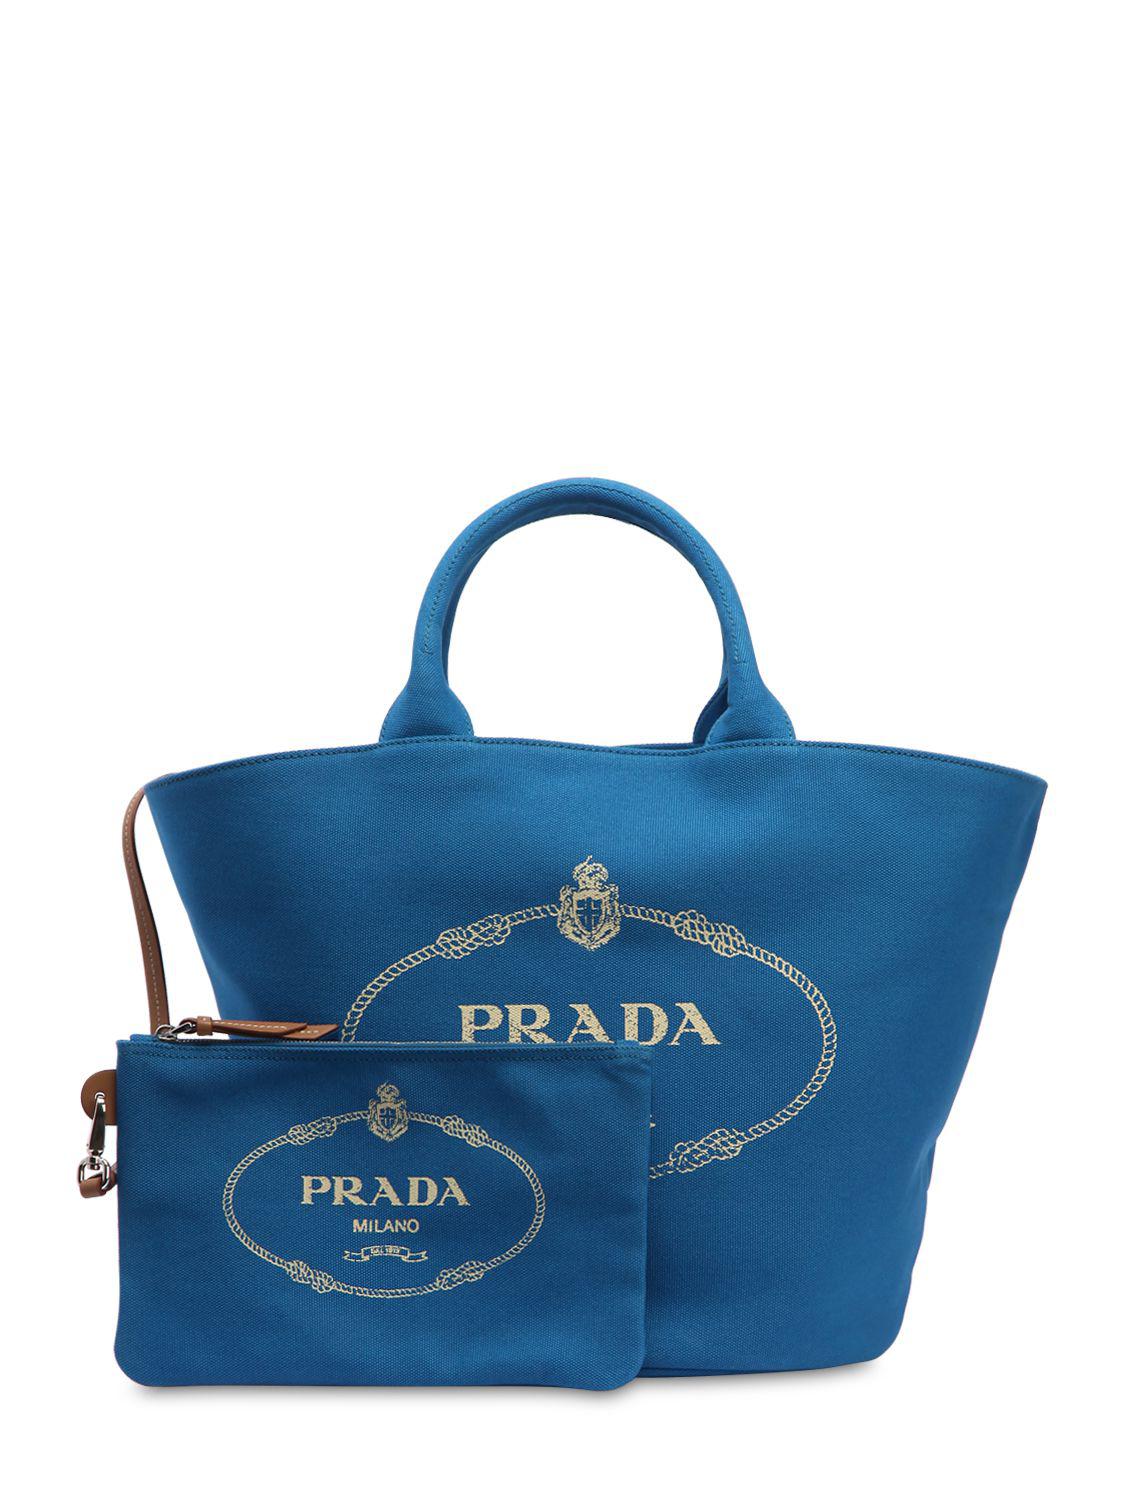 Prada Logo Printed Cotton Canvas Tote Bag in Blue | Lyst Australia